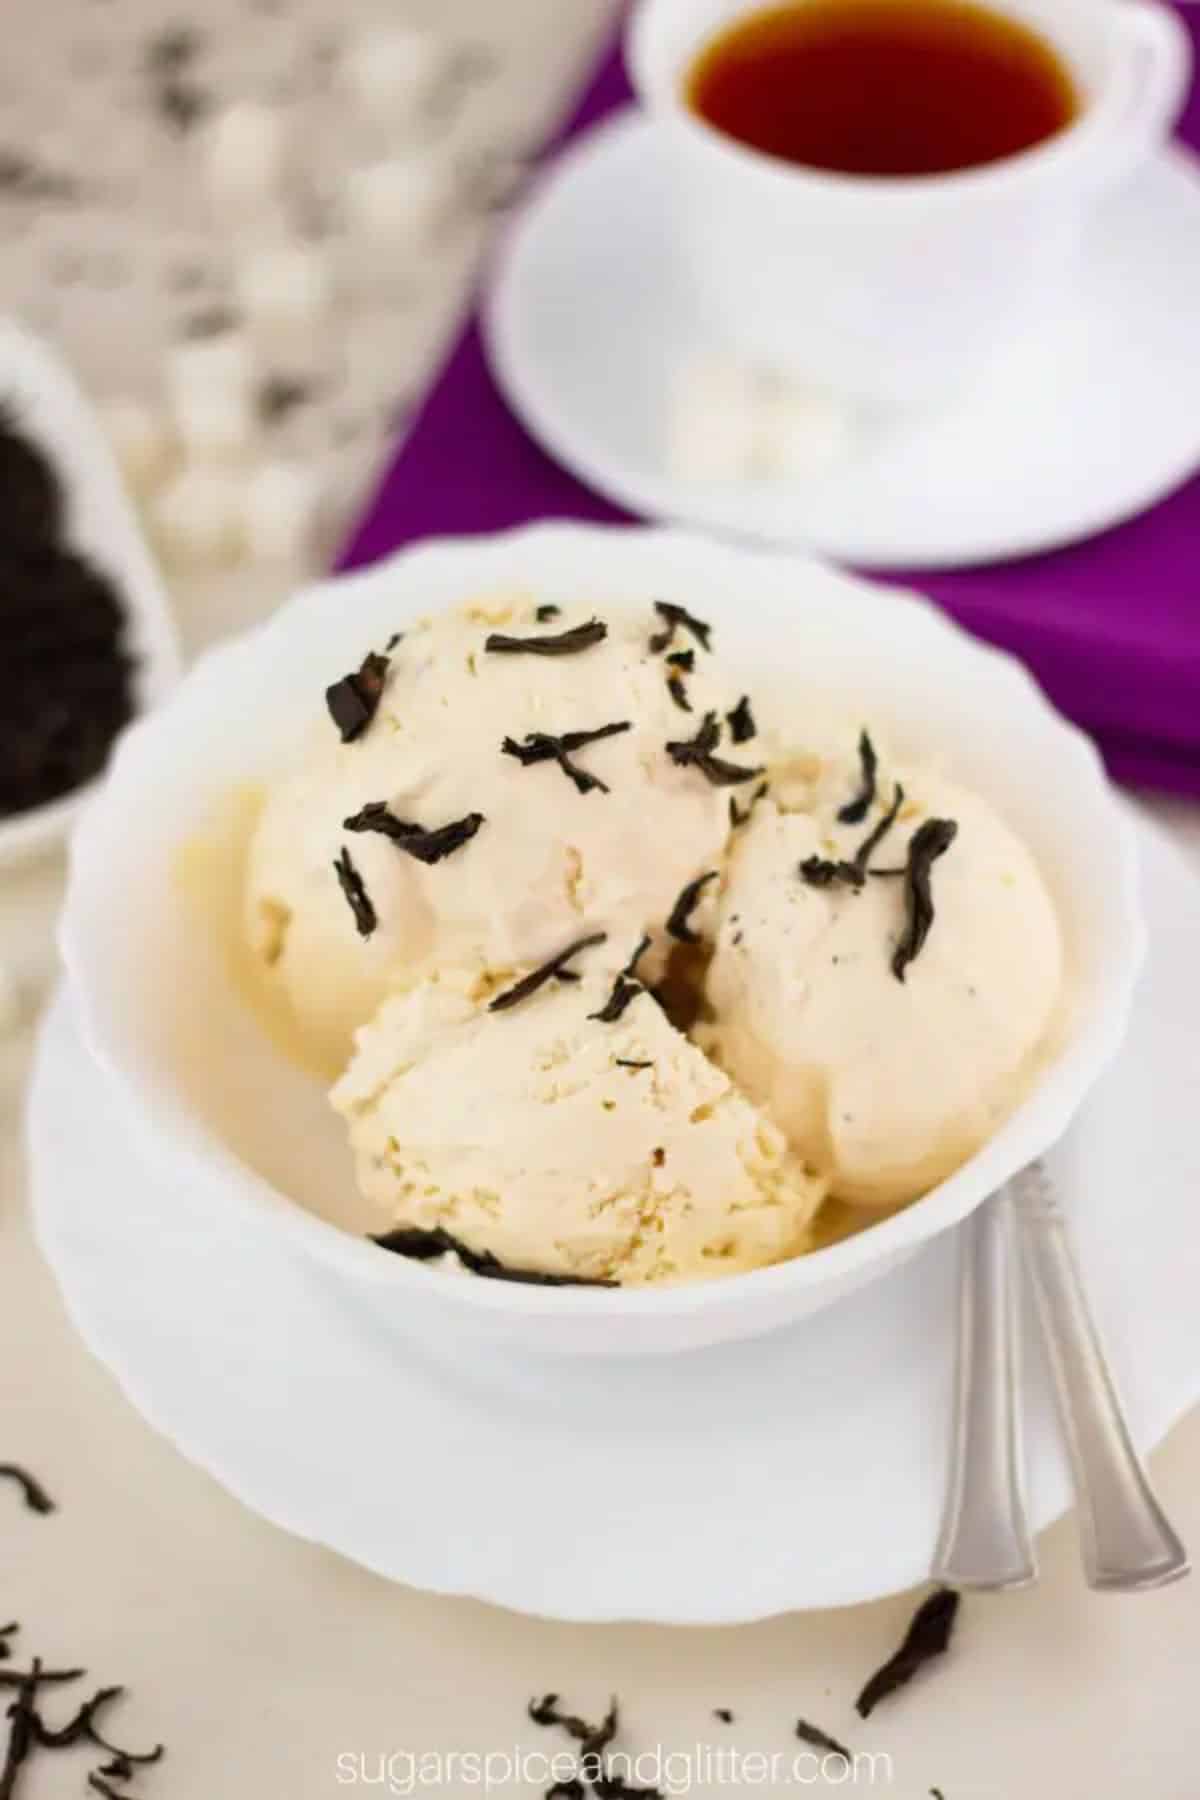 Fresh london fog ice cream in a white bowl.